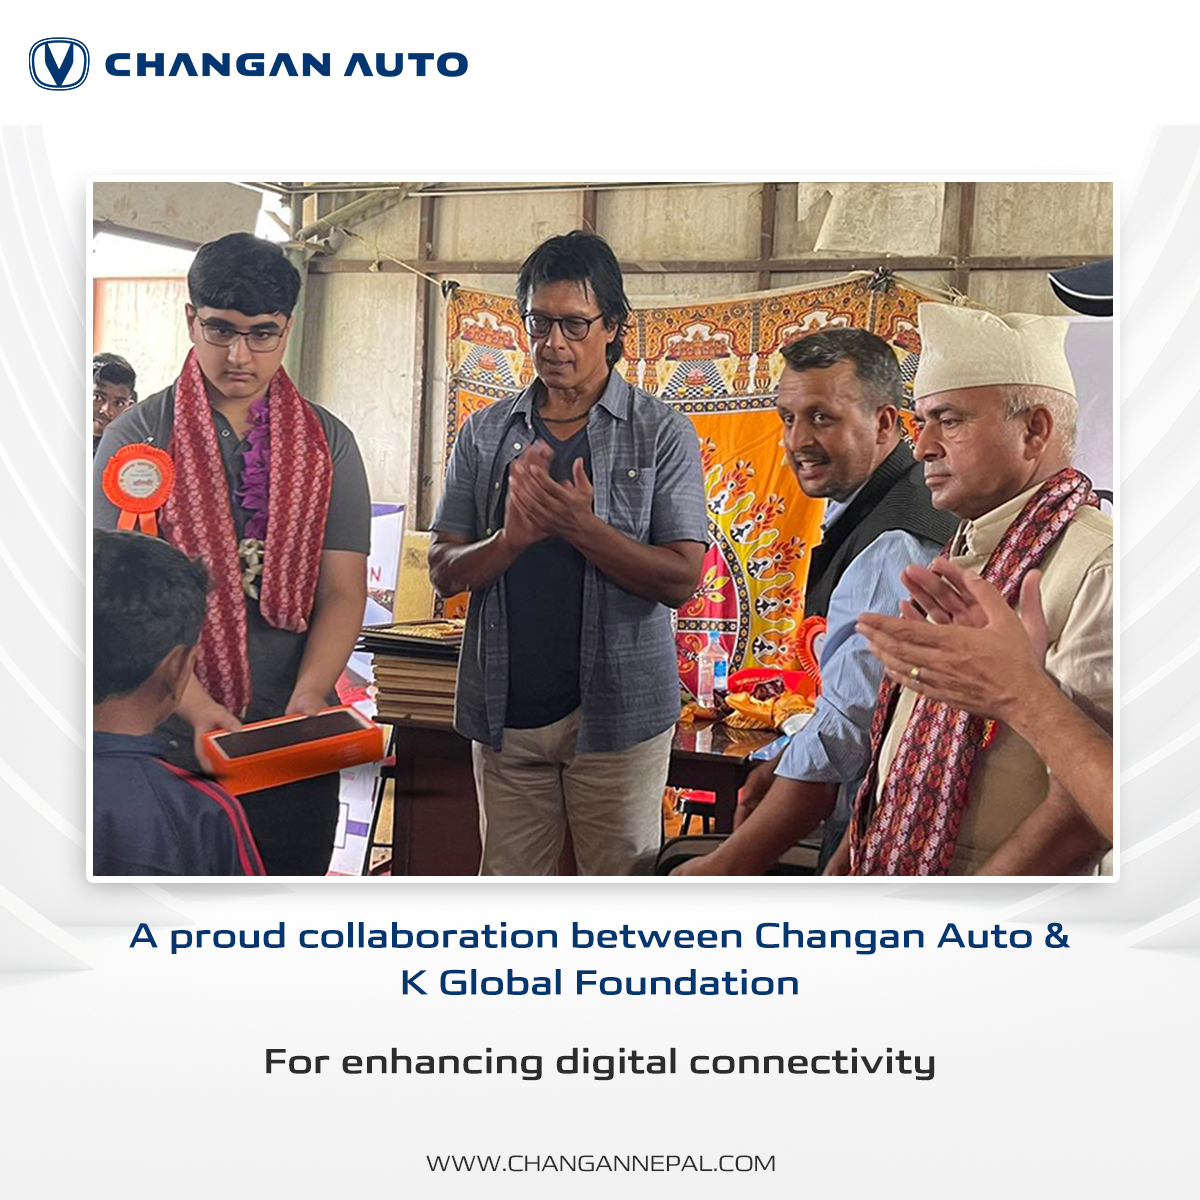 Changan Auto and K Global Foundation Collaboration